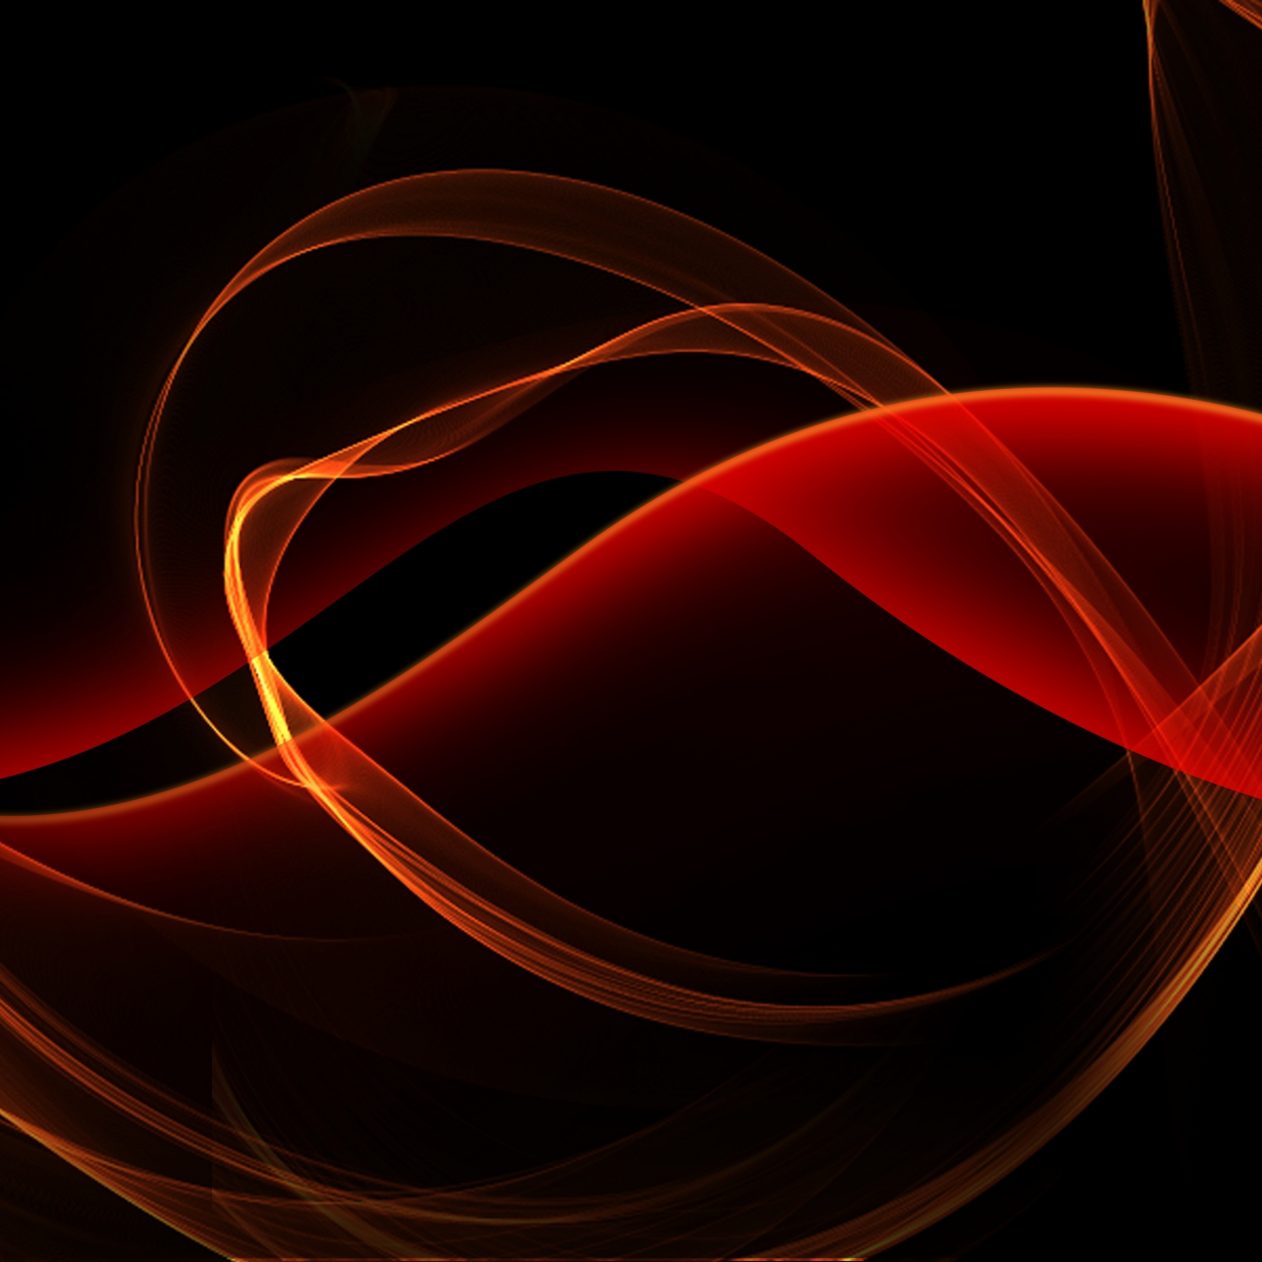 1262x1262 Parallax wallpaper 4k Black and Red Glowing Curves iPad Wallpaper 1262x1262 pixels resolution